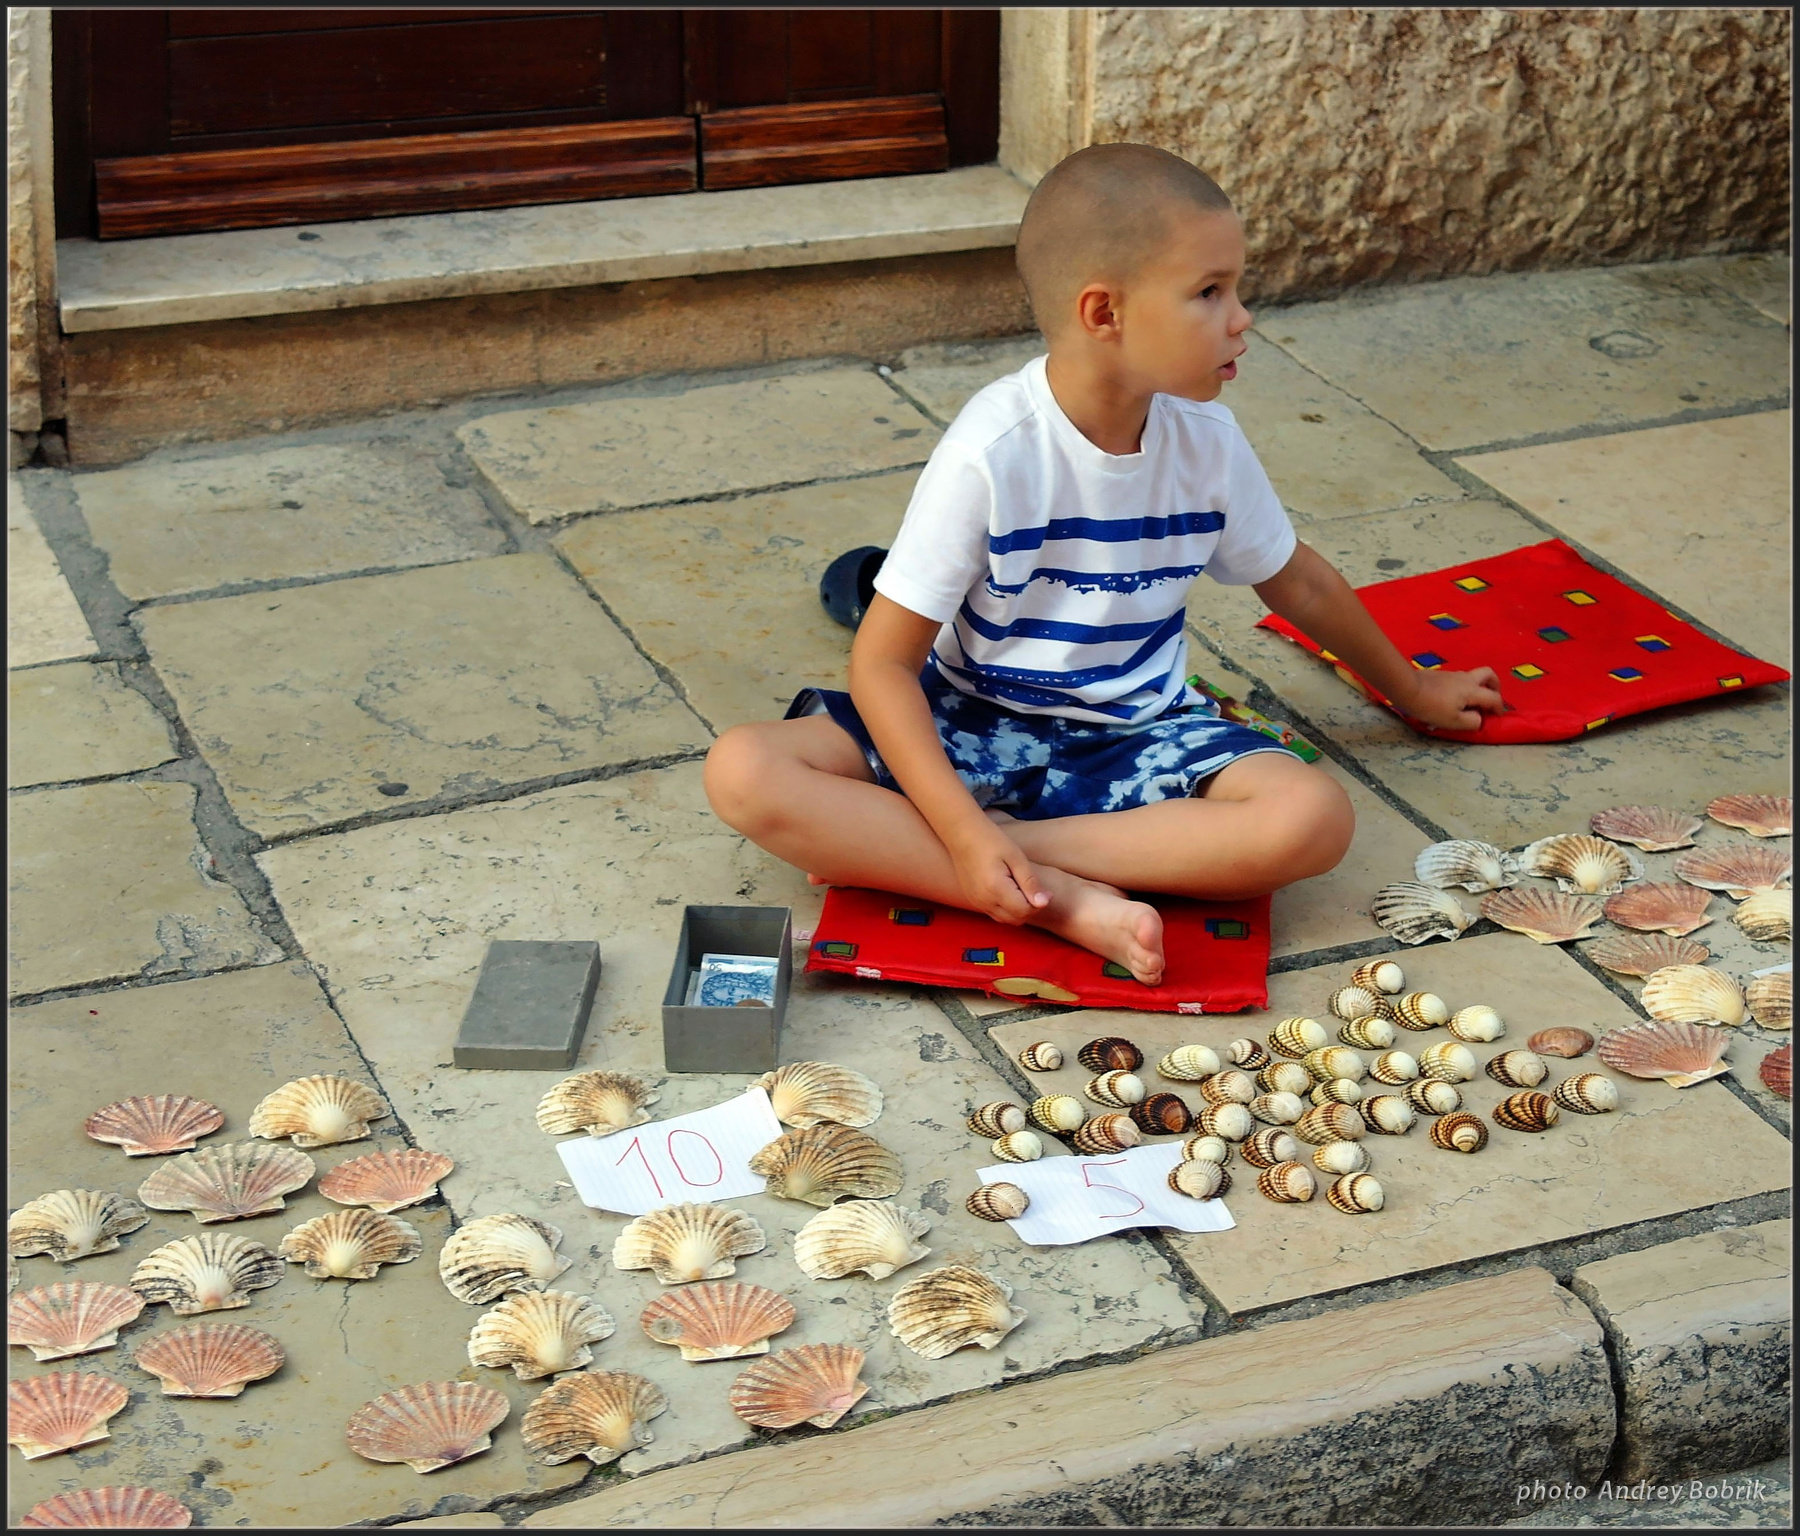 "Купите ракушки!" Хорватия Ровинь улица мальчик ракушки